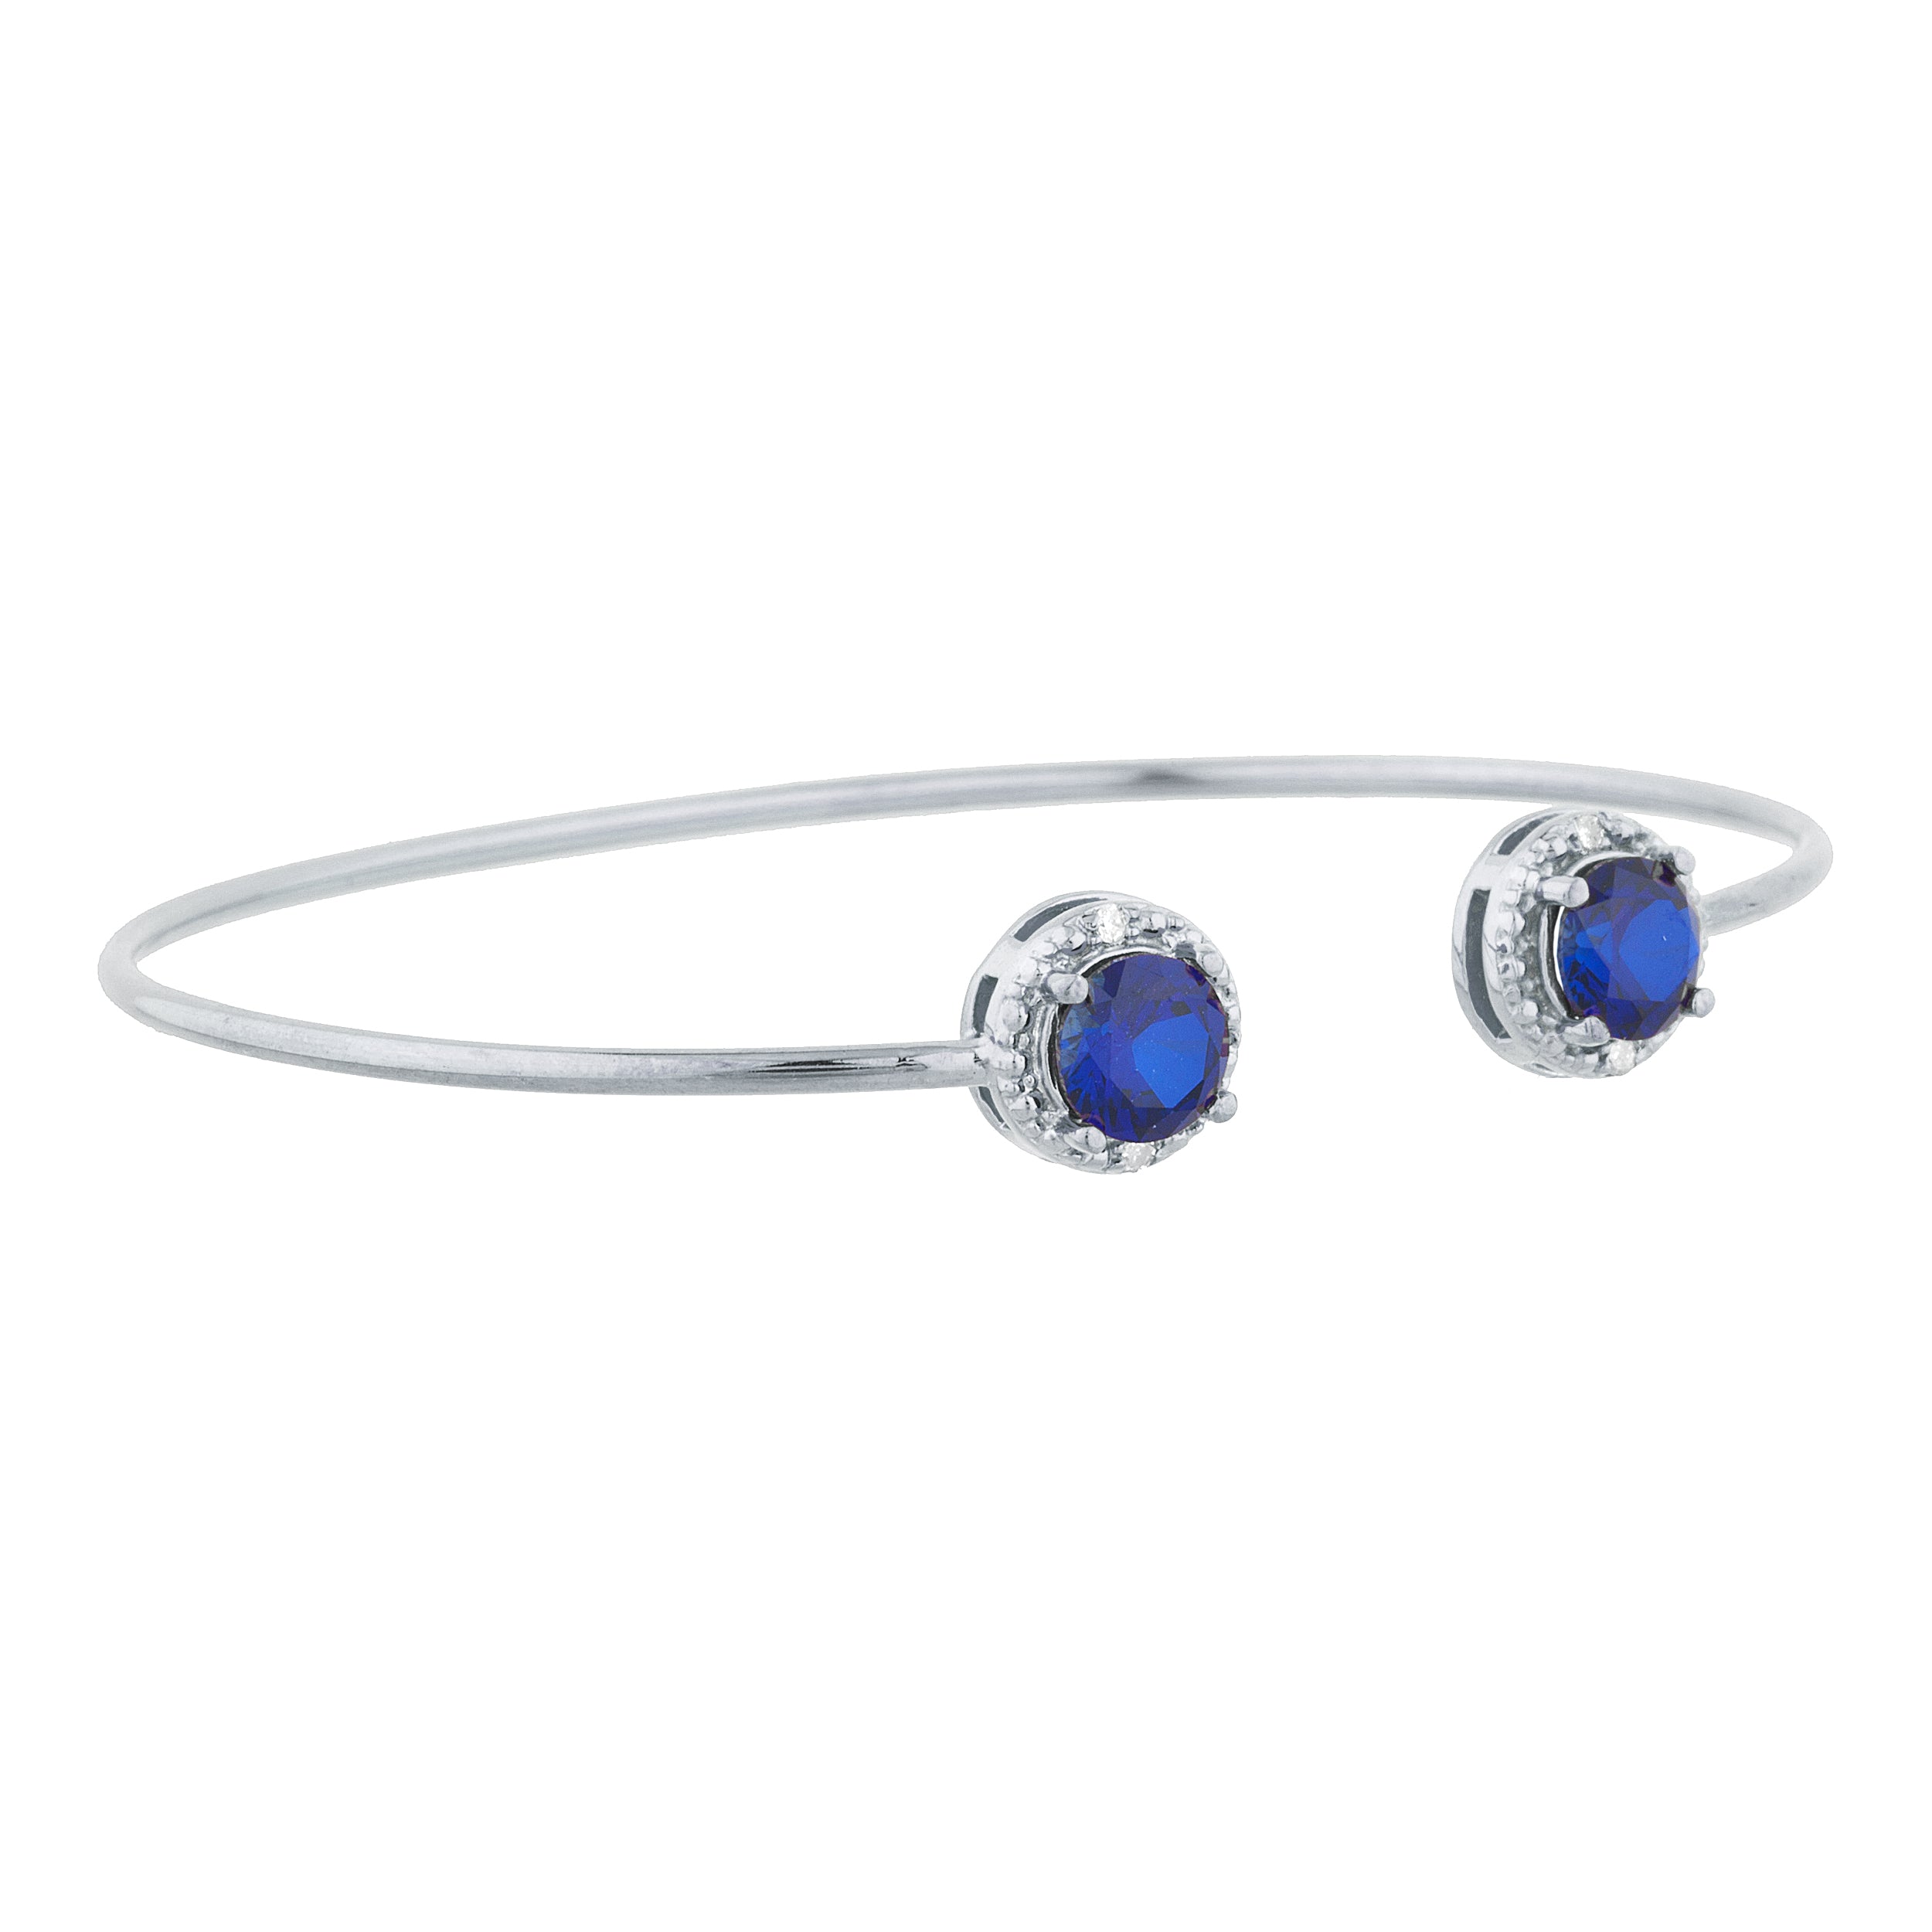 14Kt Gold Blue Sapphire & Diamond Round Bangle Bracelet